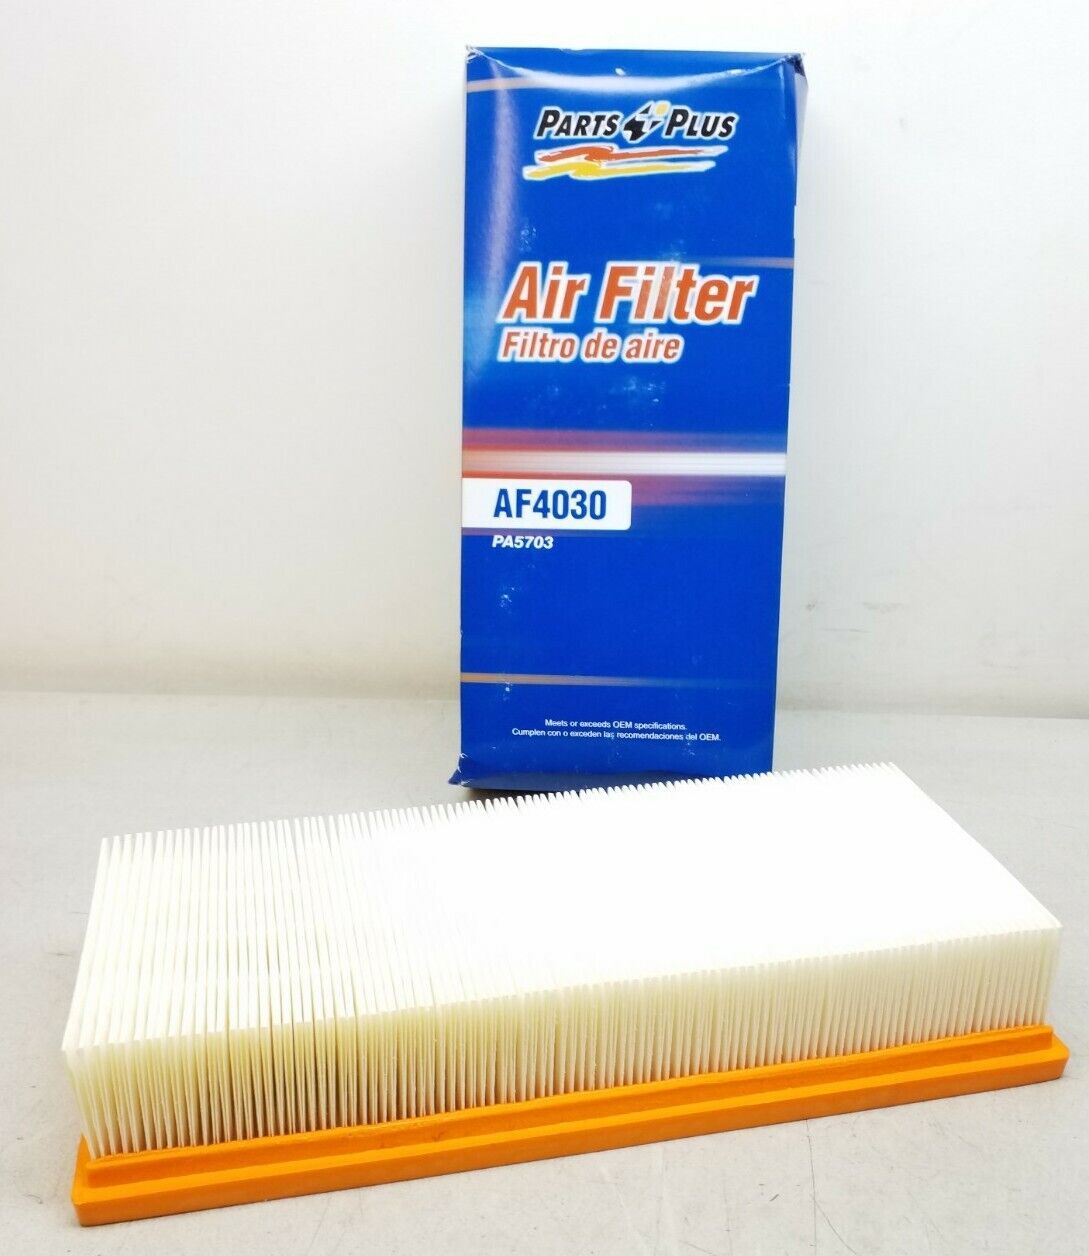 AF4030 Parts Plus Air Filter Free Shipping Free Returns AF4030 Parts Plus